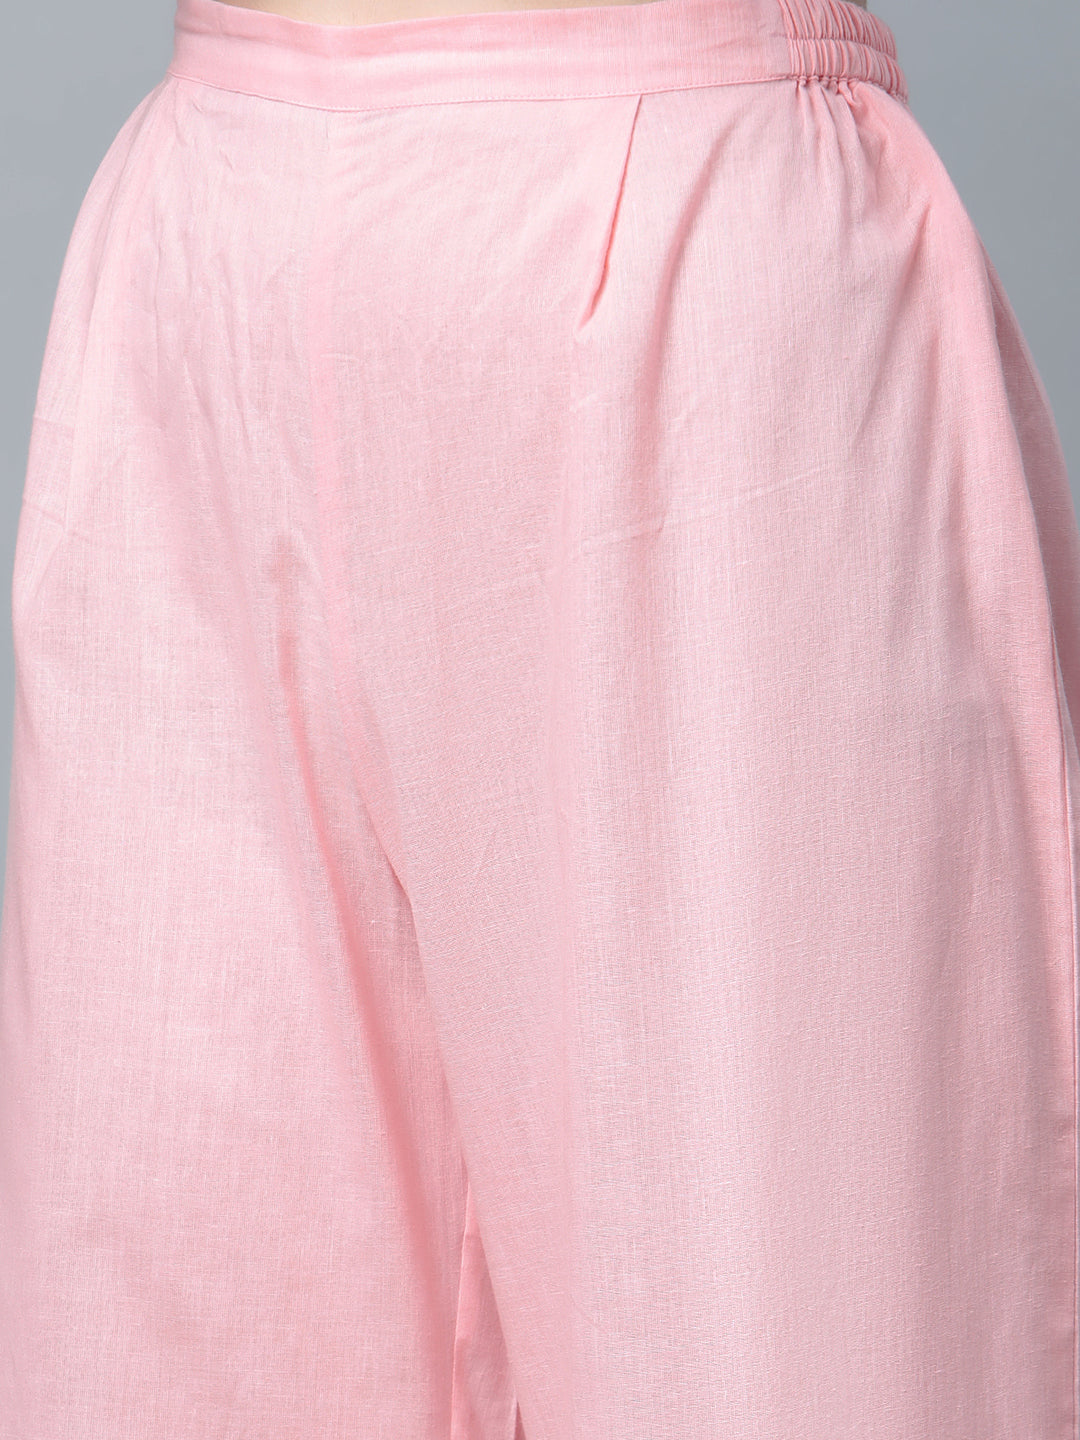 Women's Baby Pink Cotton Printed Kurta Palazzo Set - Ahalyaa